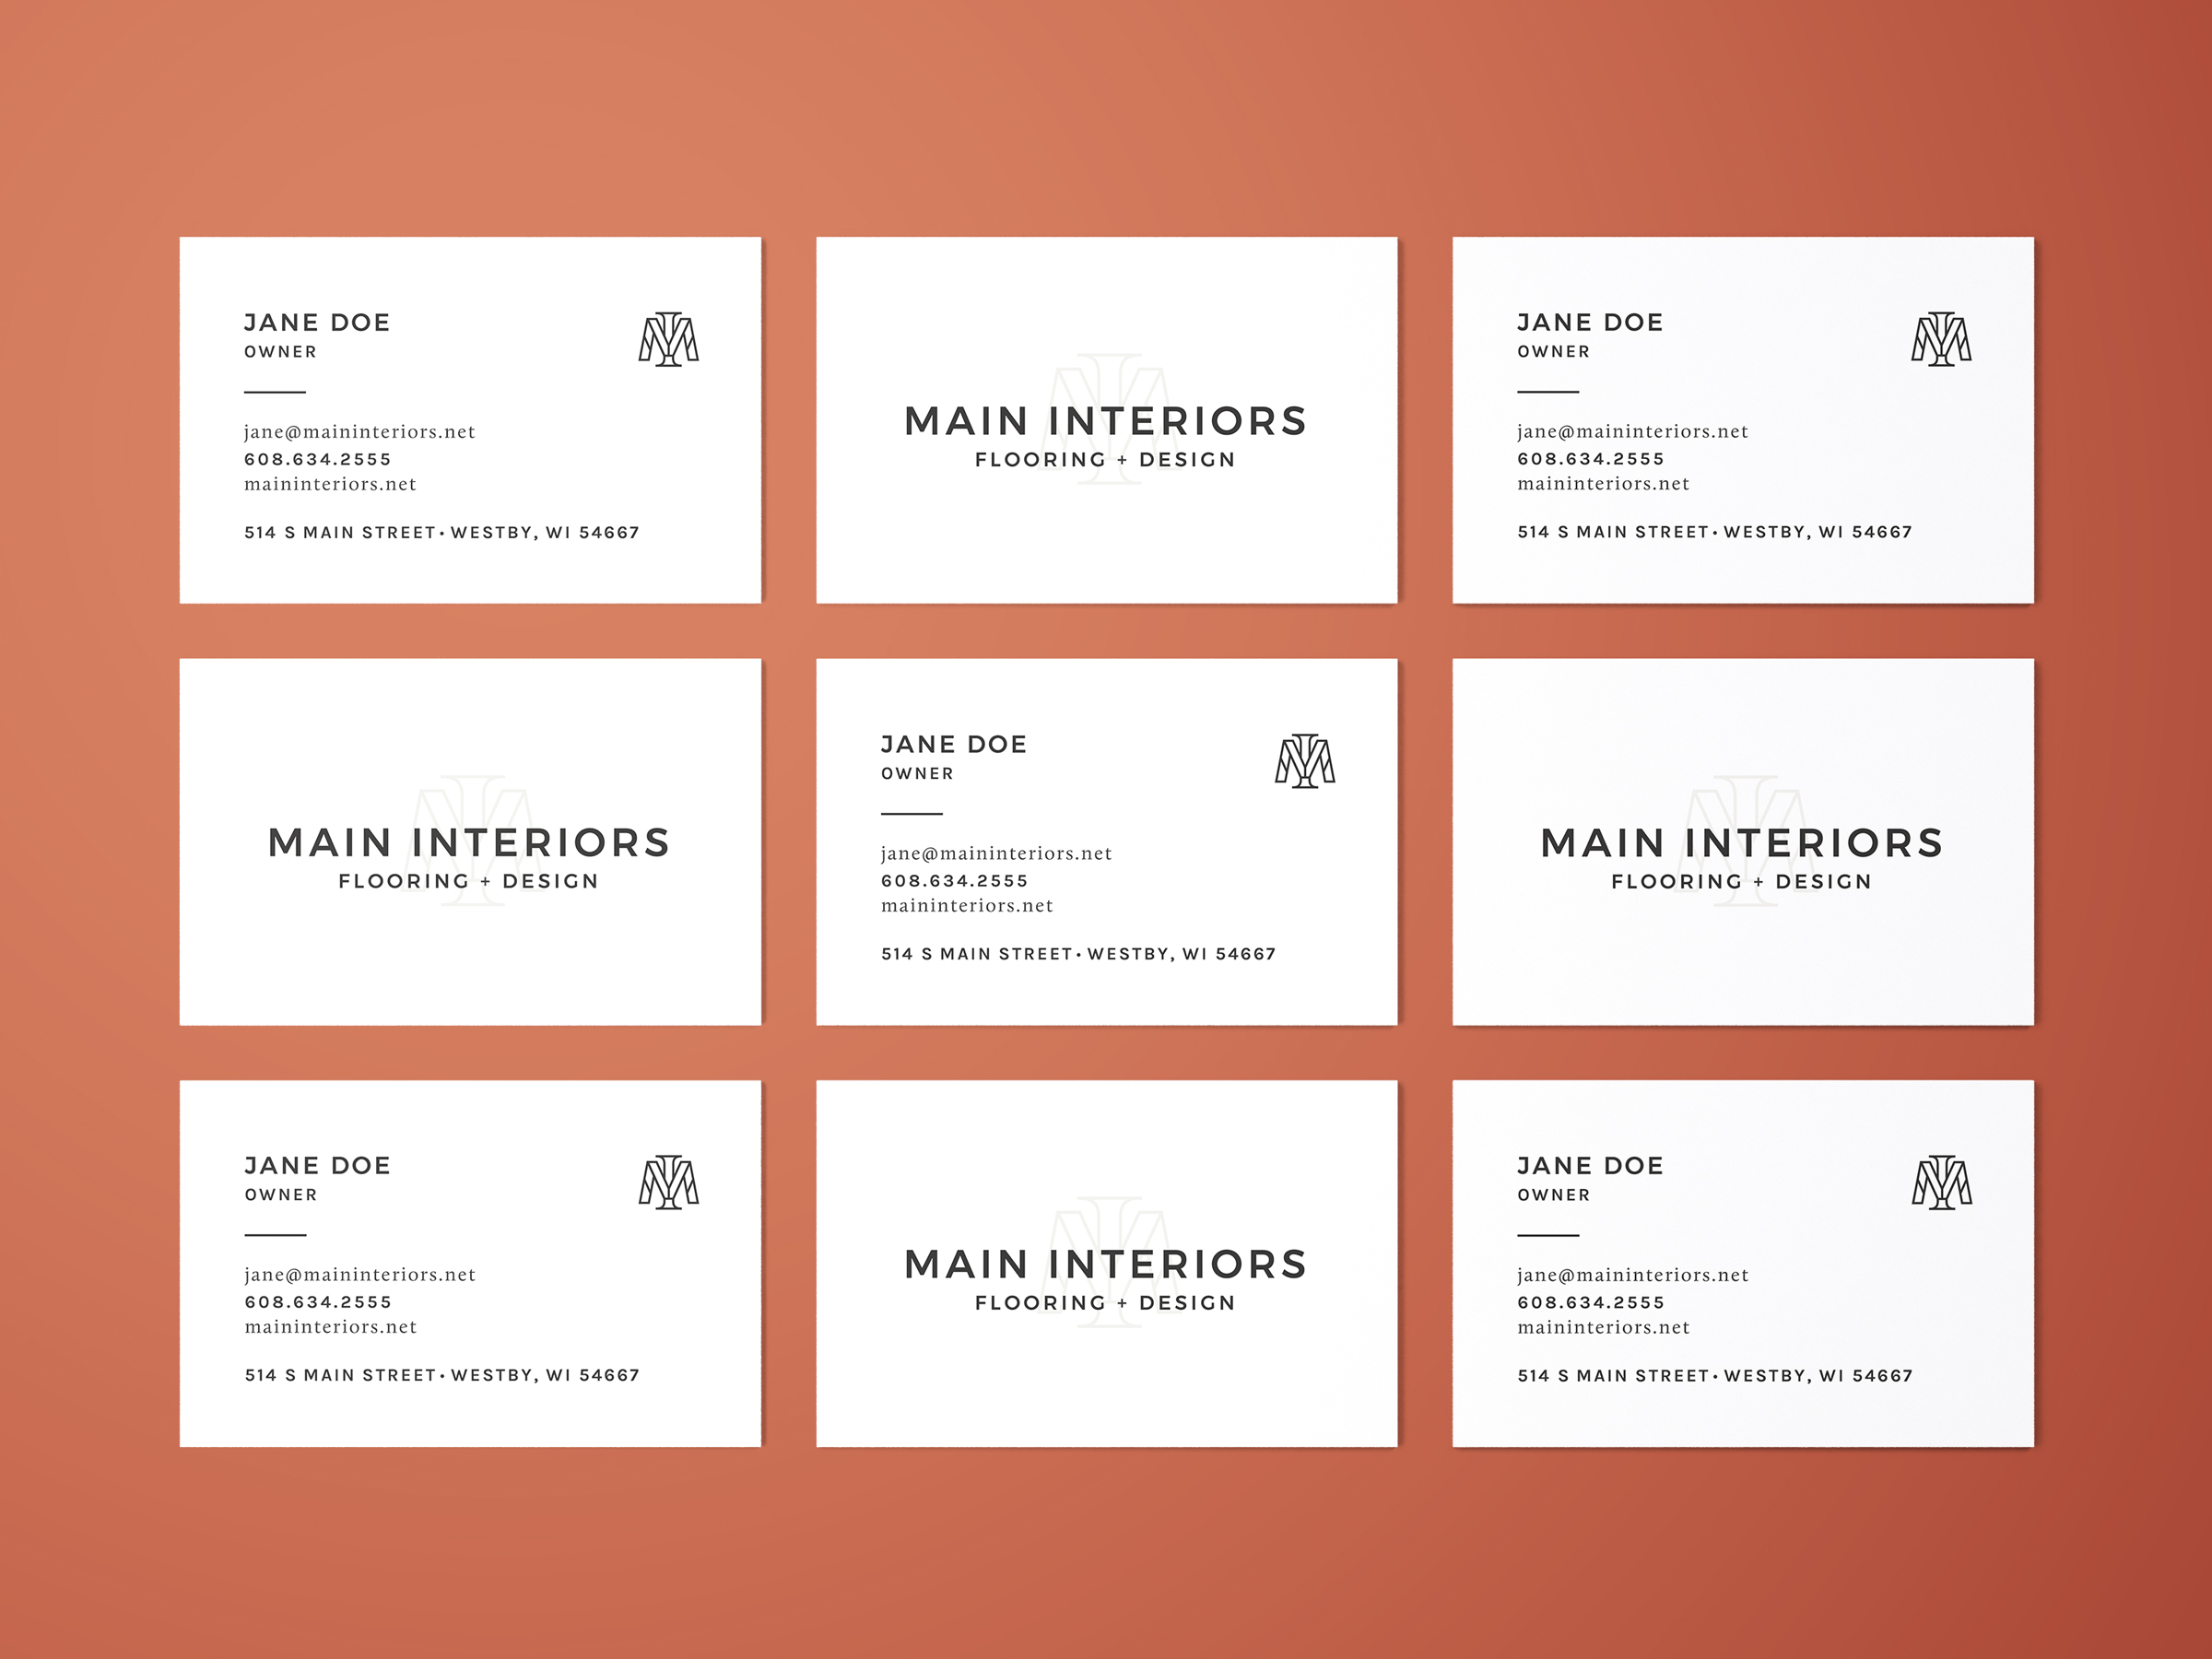 MI Business Cards - Main Interiors